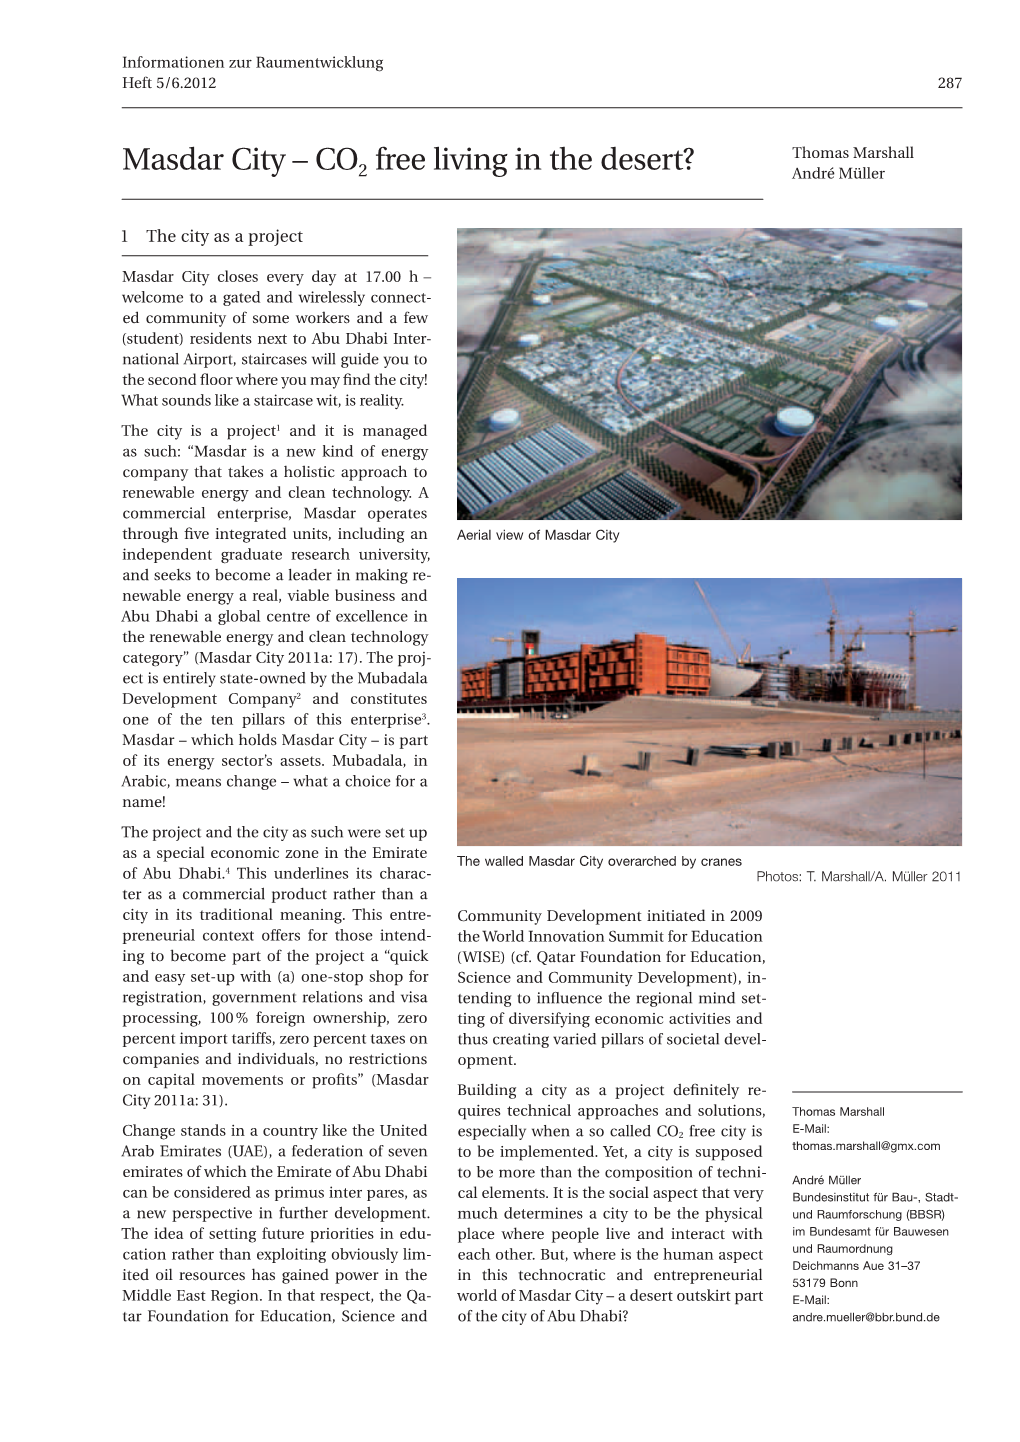 Masdar City – CO2 Free Living in the Desert? André Müller